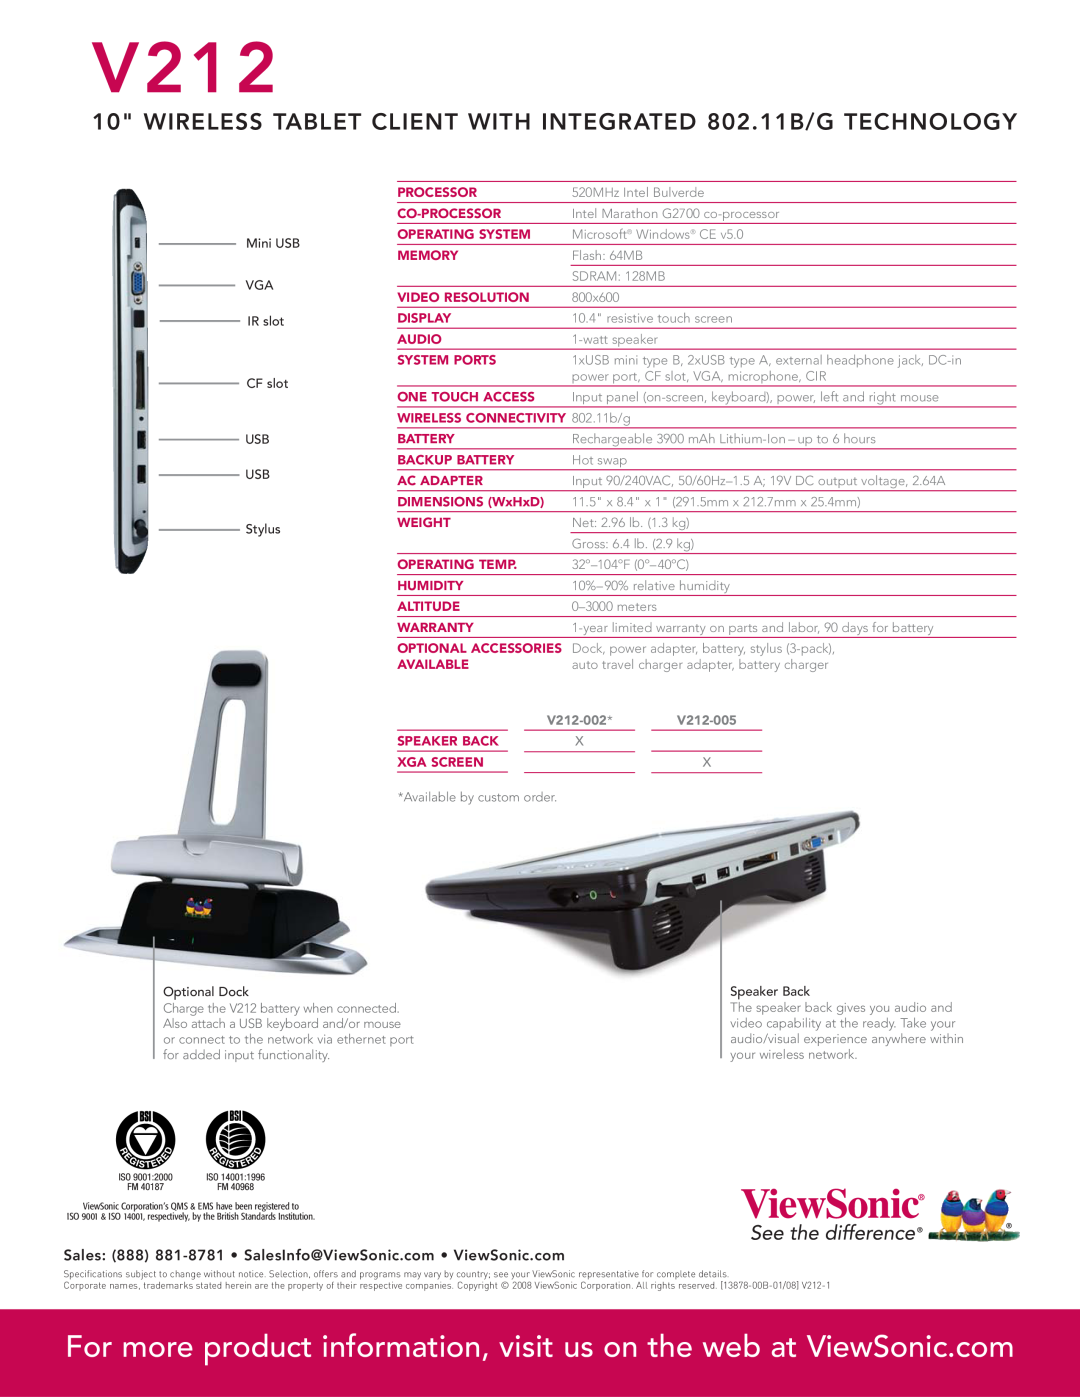 ViewSonic manual Mini USB VGA IR slot CF slot USB USB Stylus, V212-002, V212-005, Optional Dock, Speaker Back 